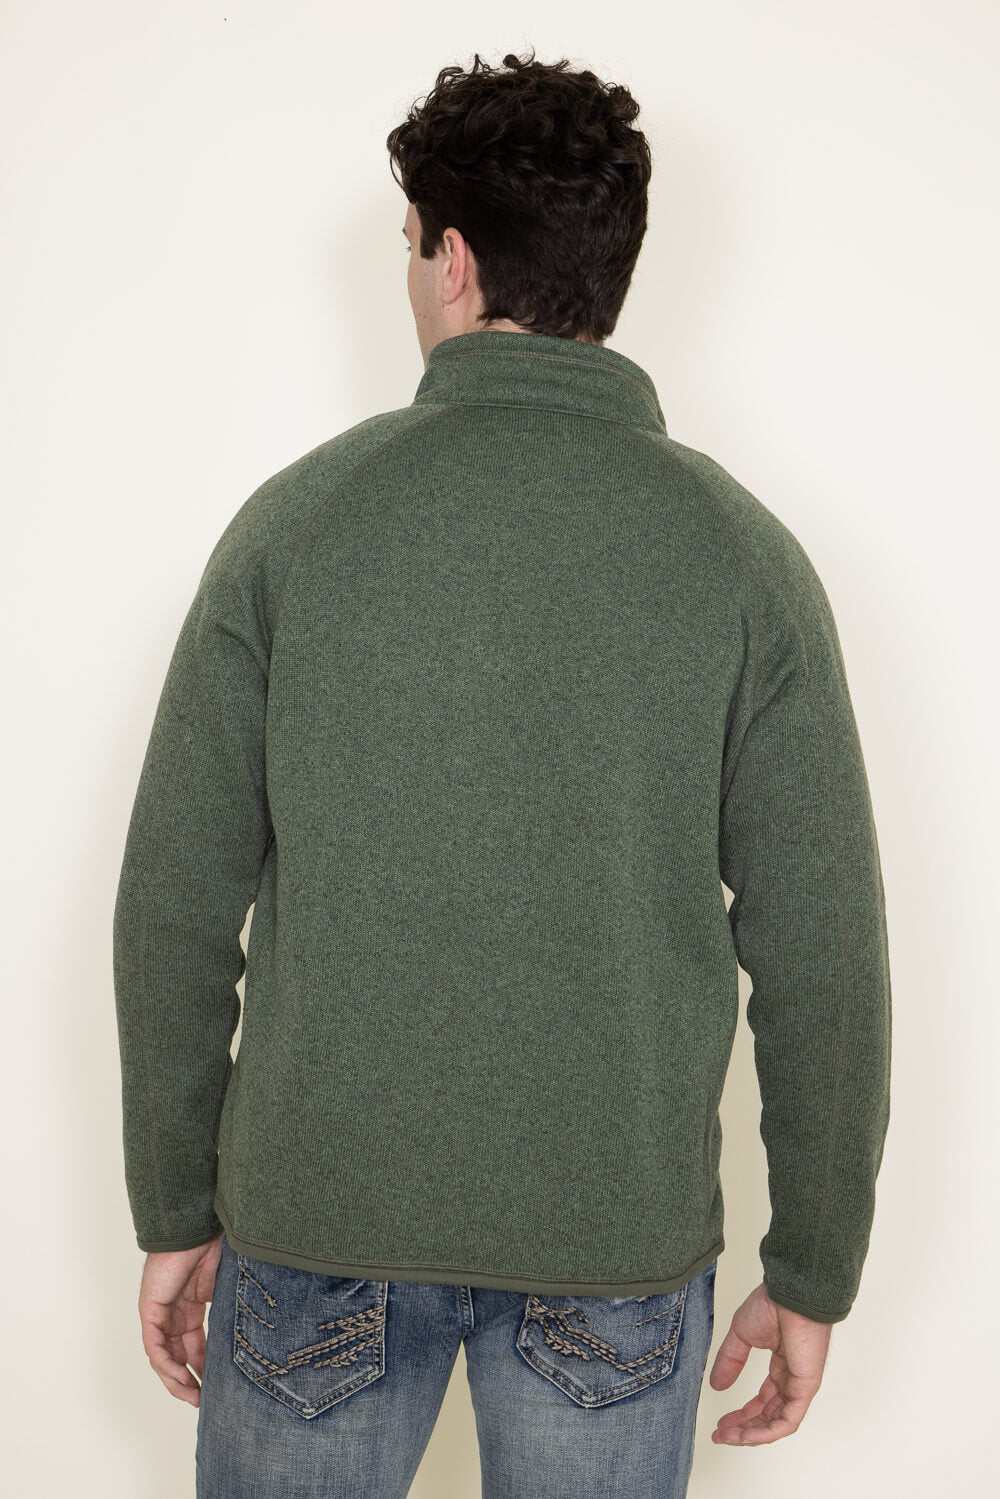 Patagonia Men's Better Sweater Quarter Zip in Green